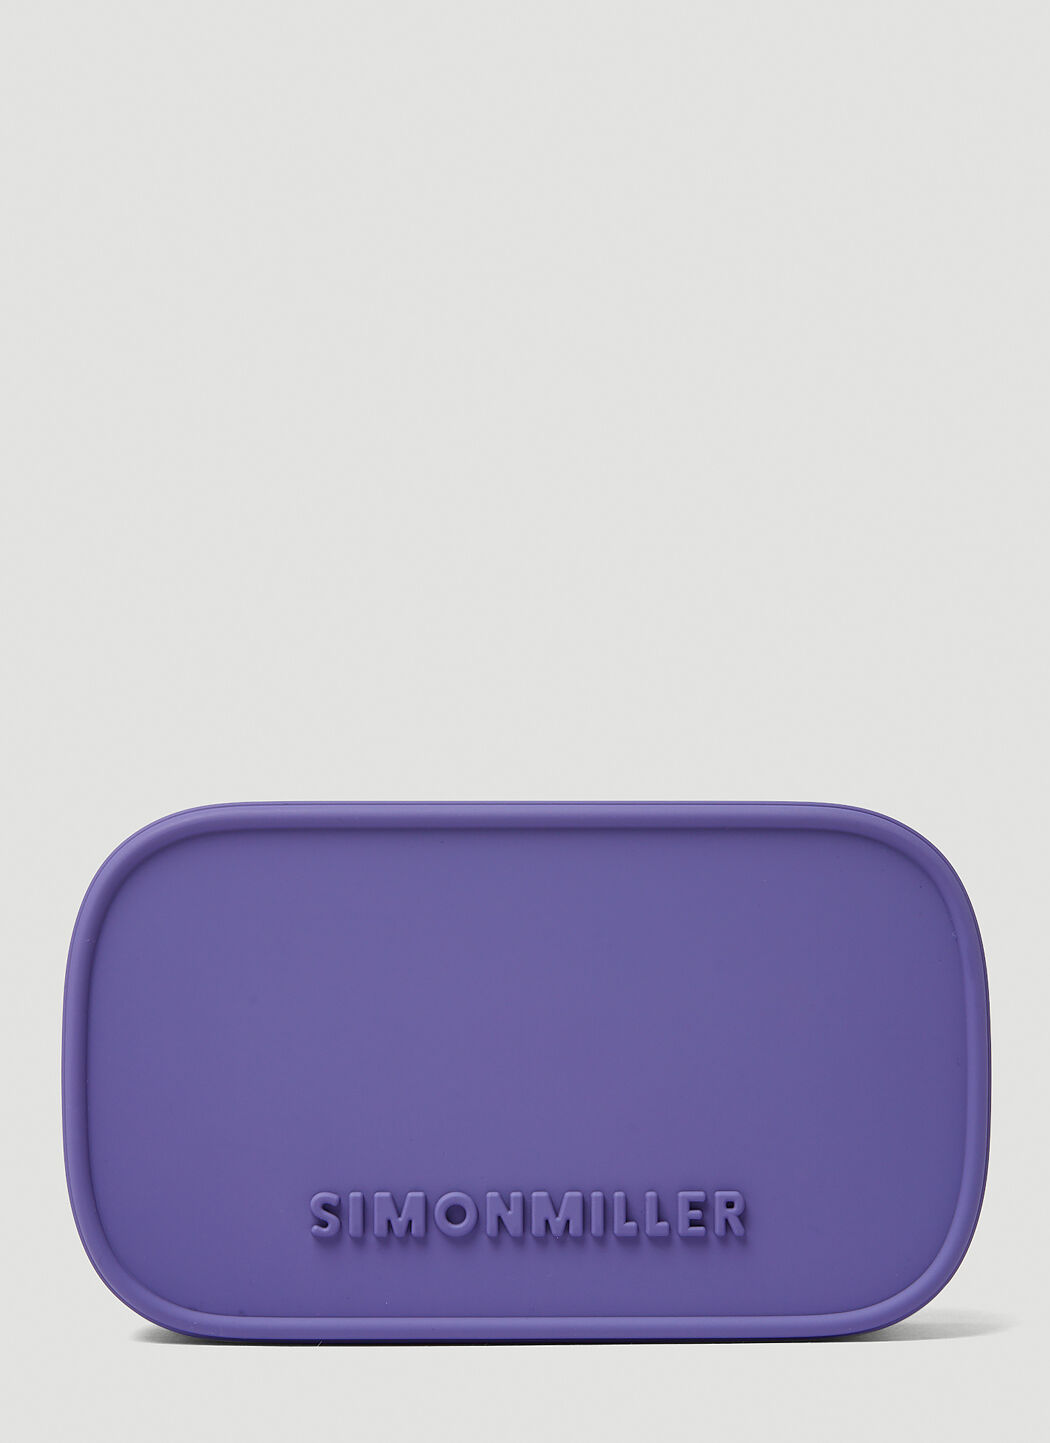 SIMON MILLER Pill Clutch Bag Yellow smi0249013